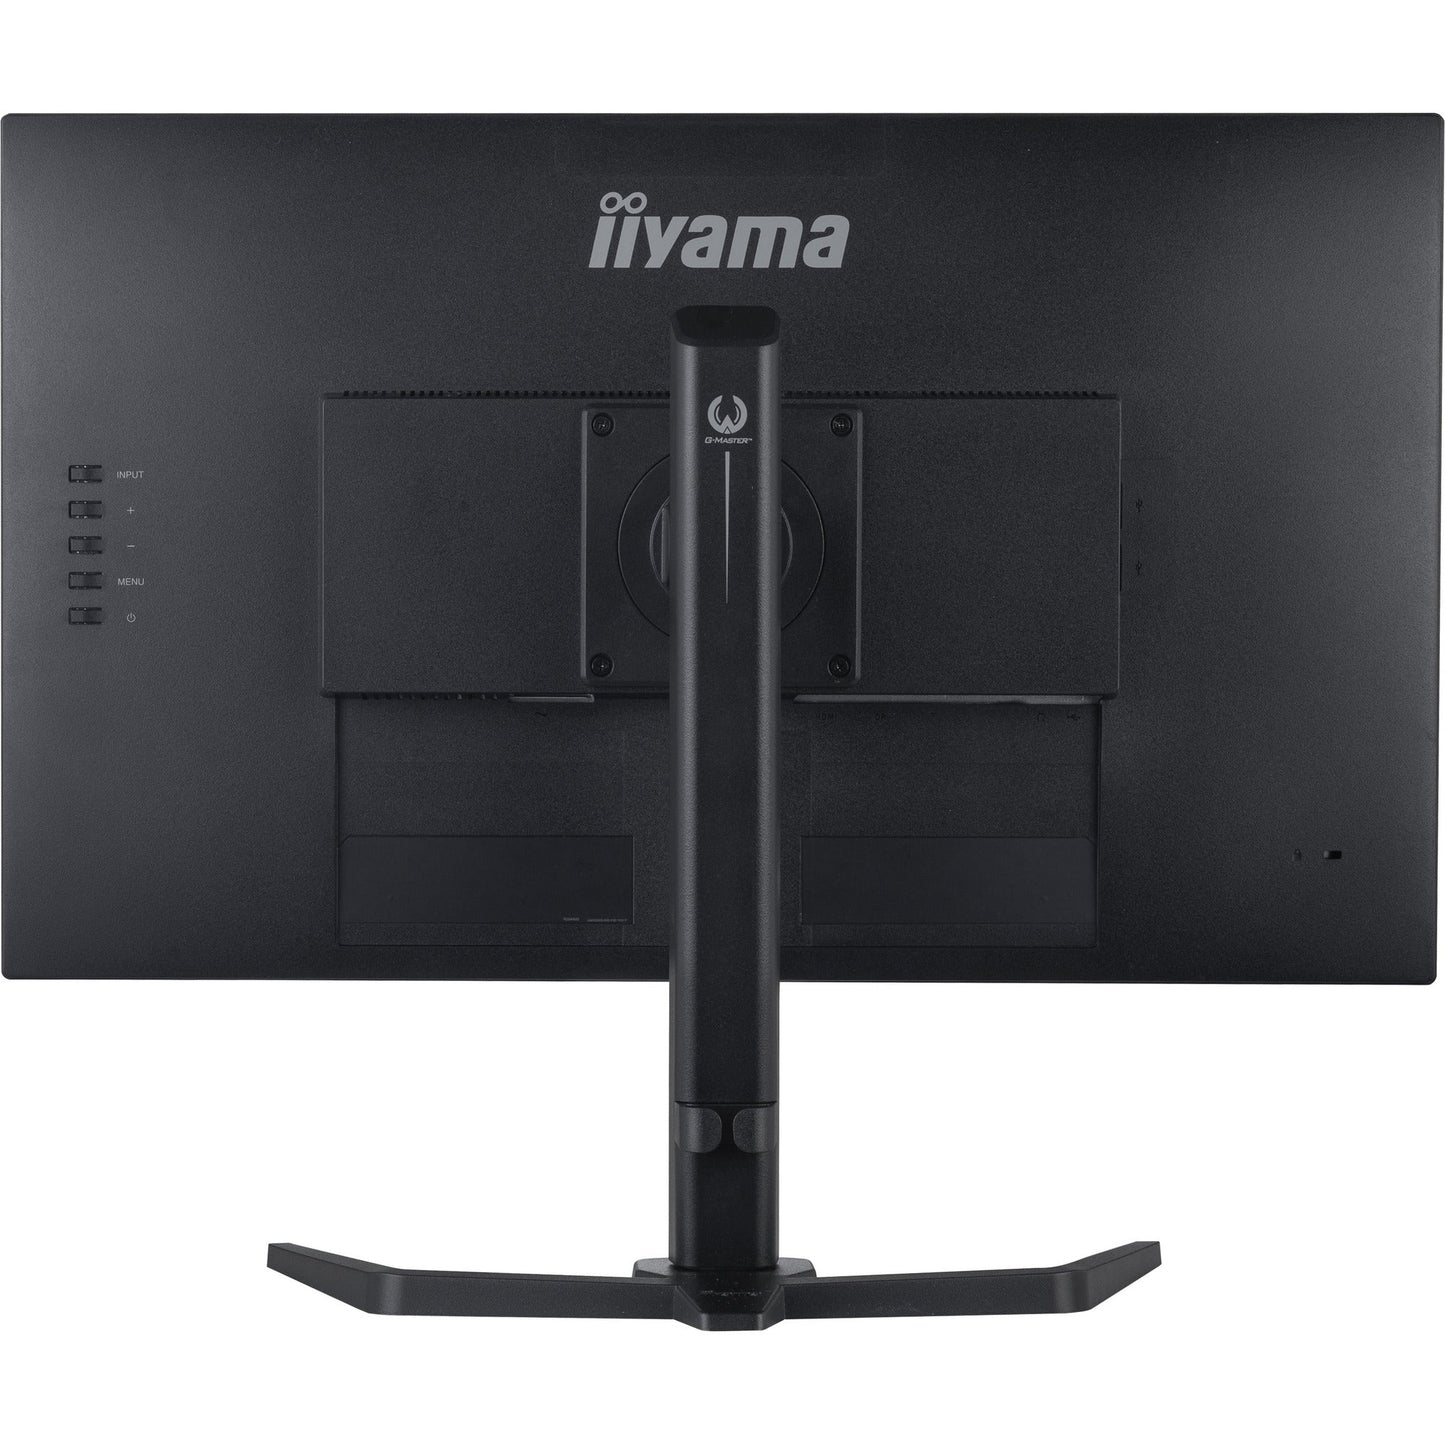 iiyama G-Master GB2770HSU-B5 Red Eagle Gaming Monitor with Height Adjust Stand